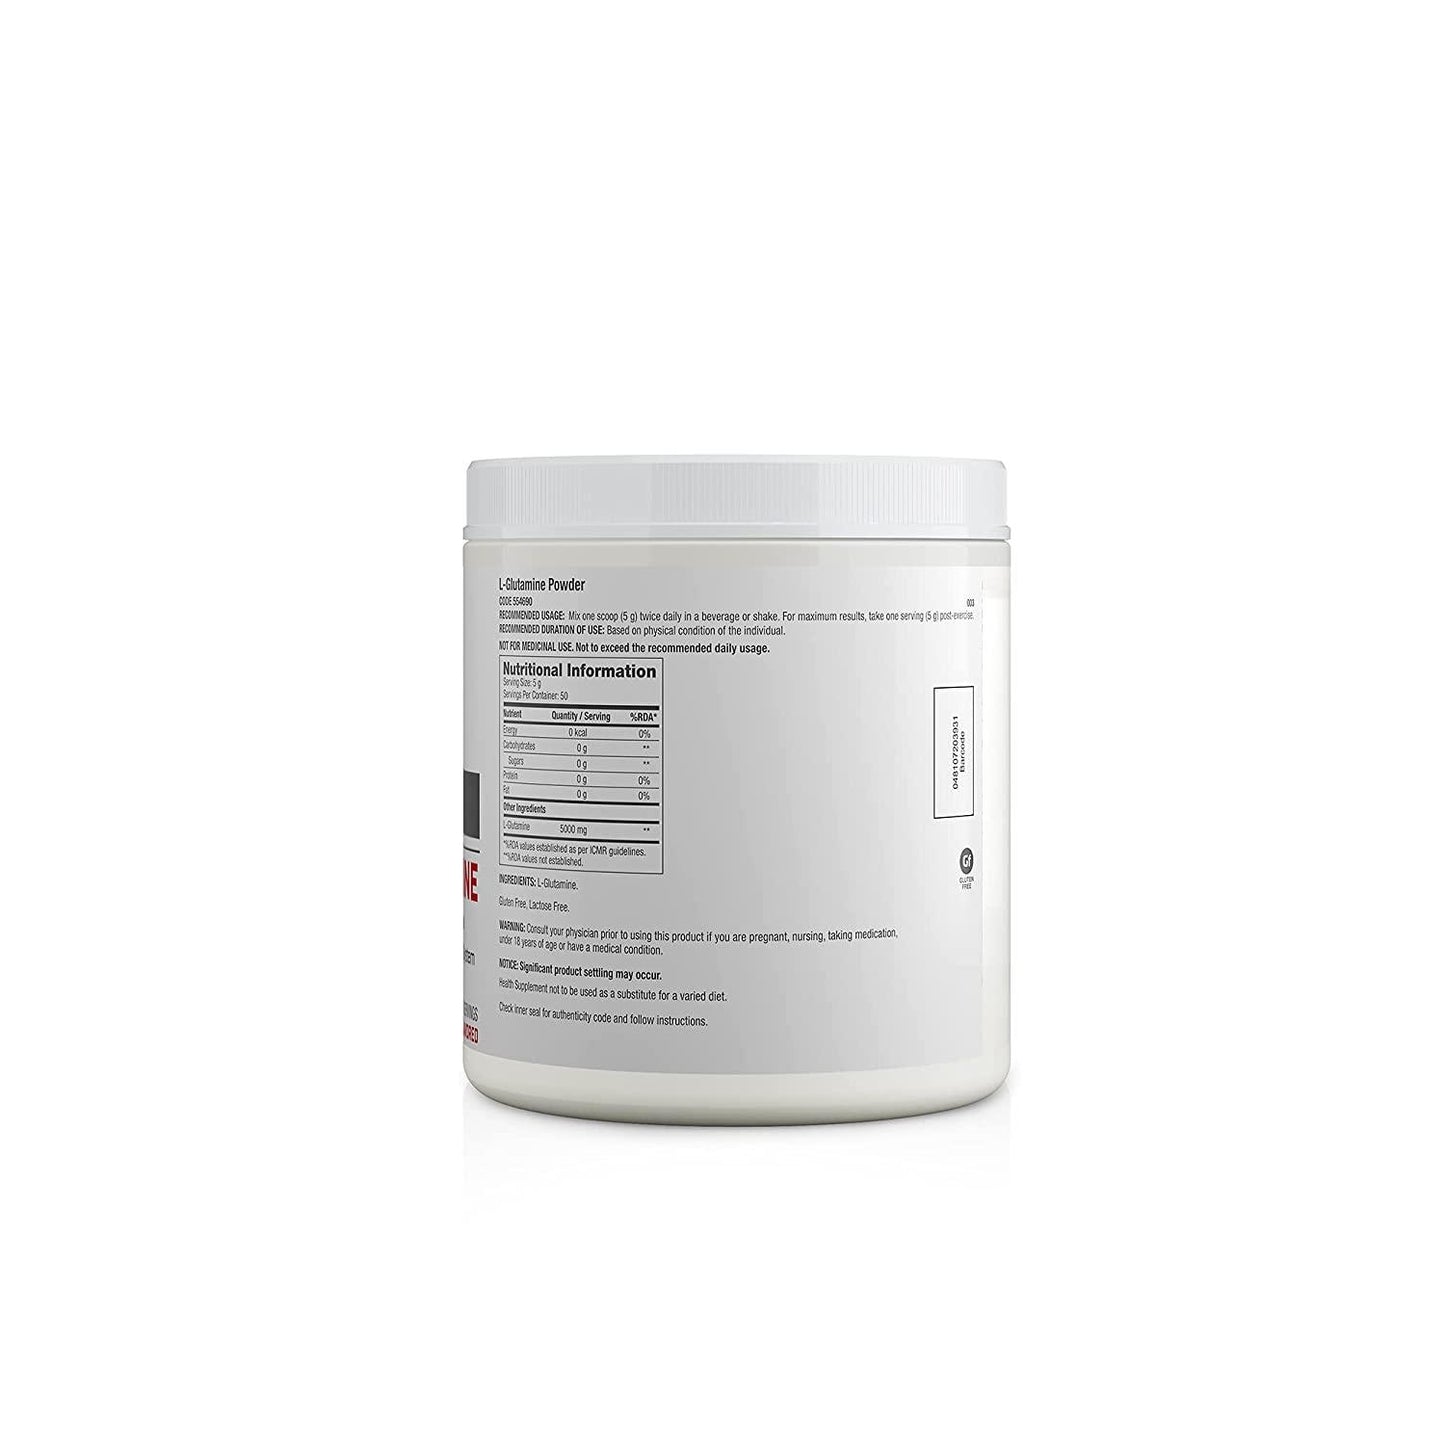 GNC GNC Pro Performance L-Glutamine 5000 mg - wodarmour